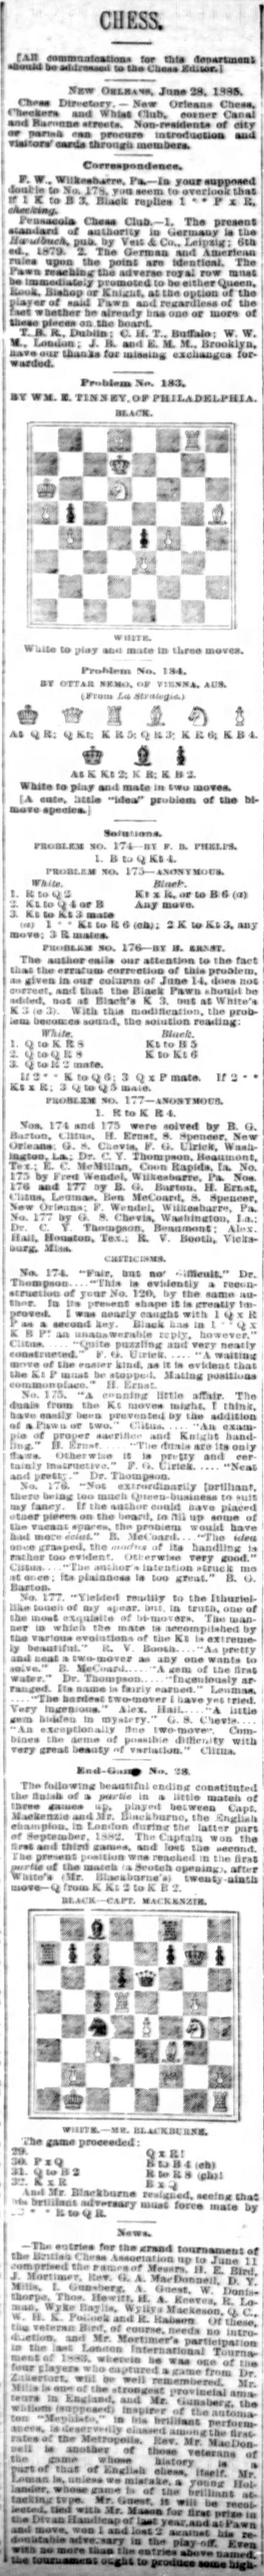 1885.06.28-01 New Orleans Times-Democrat.jpg